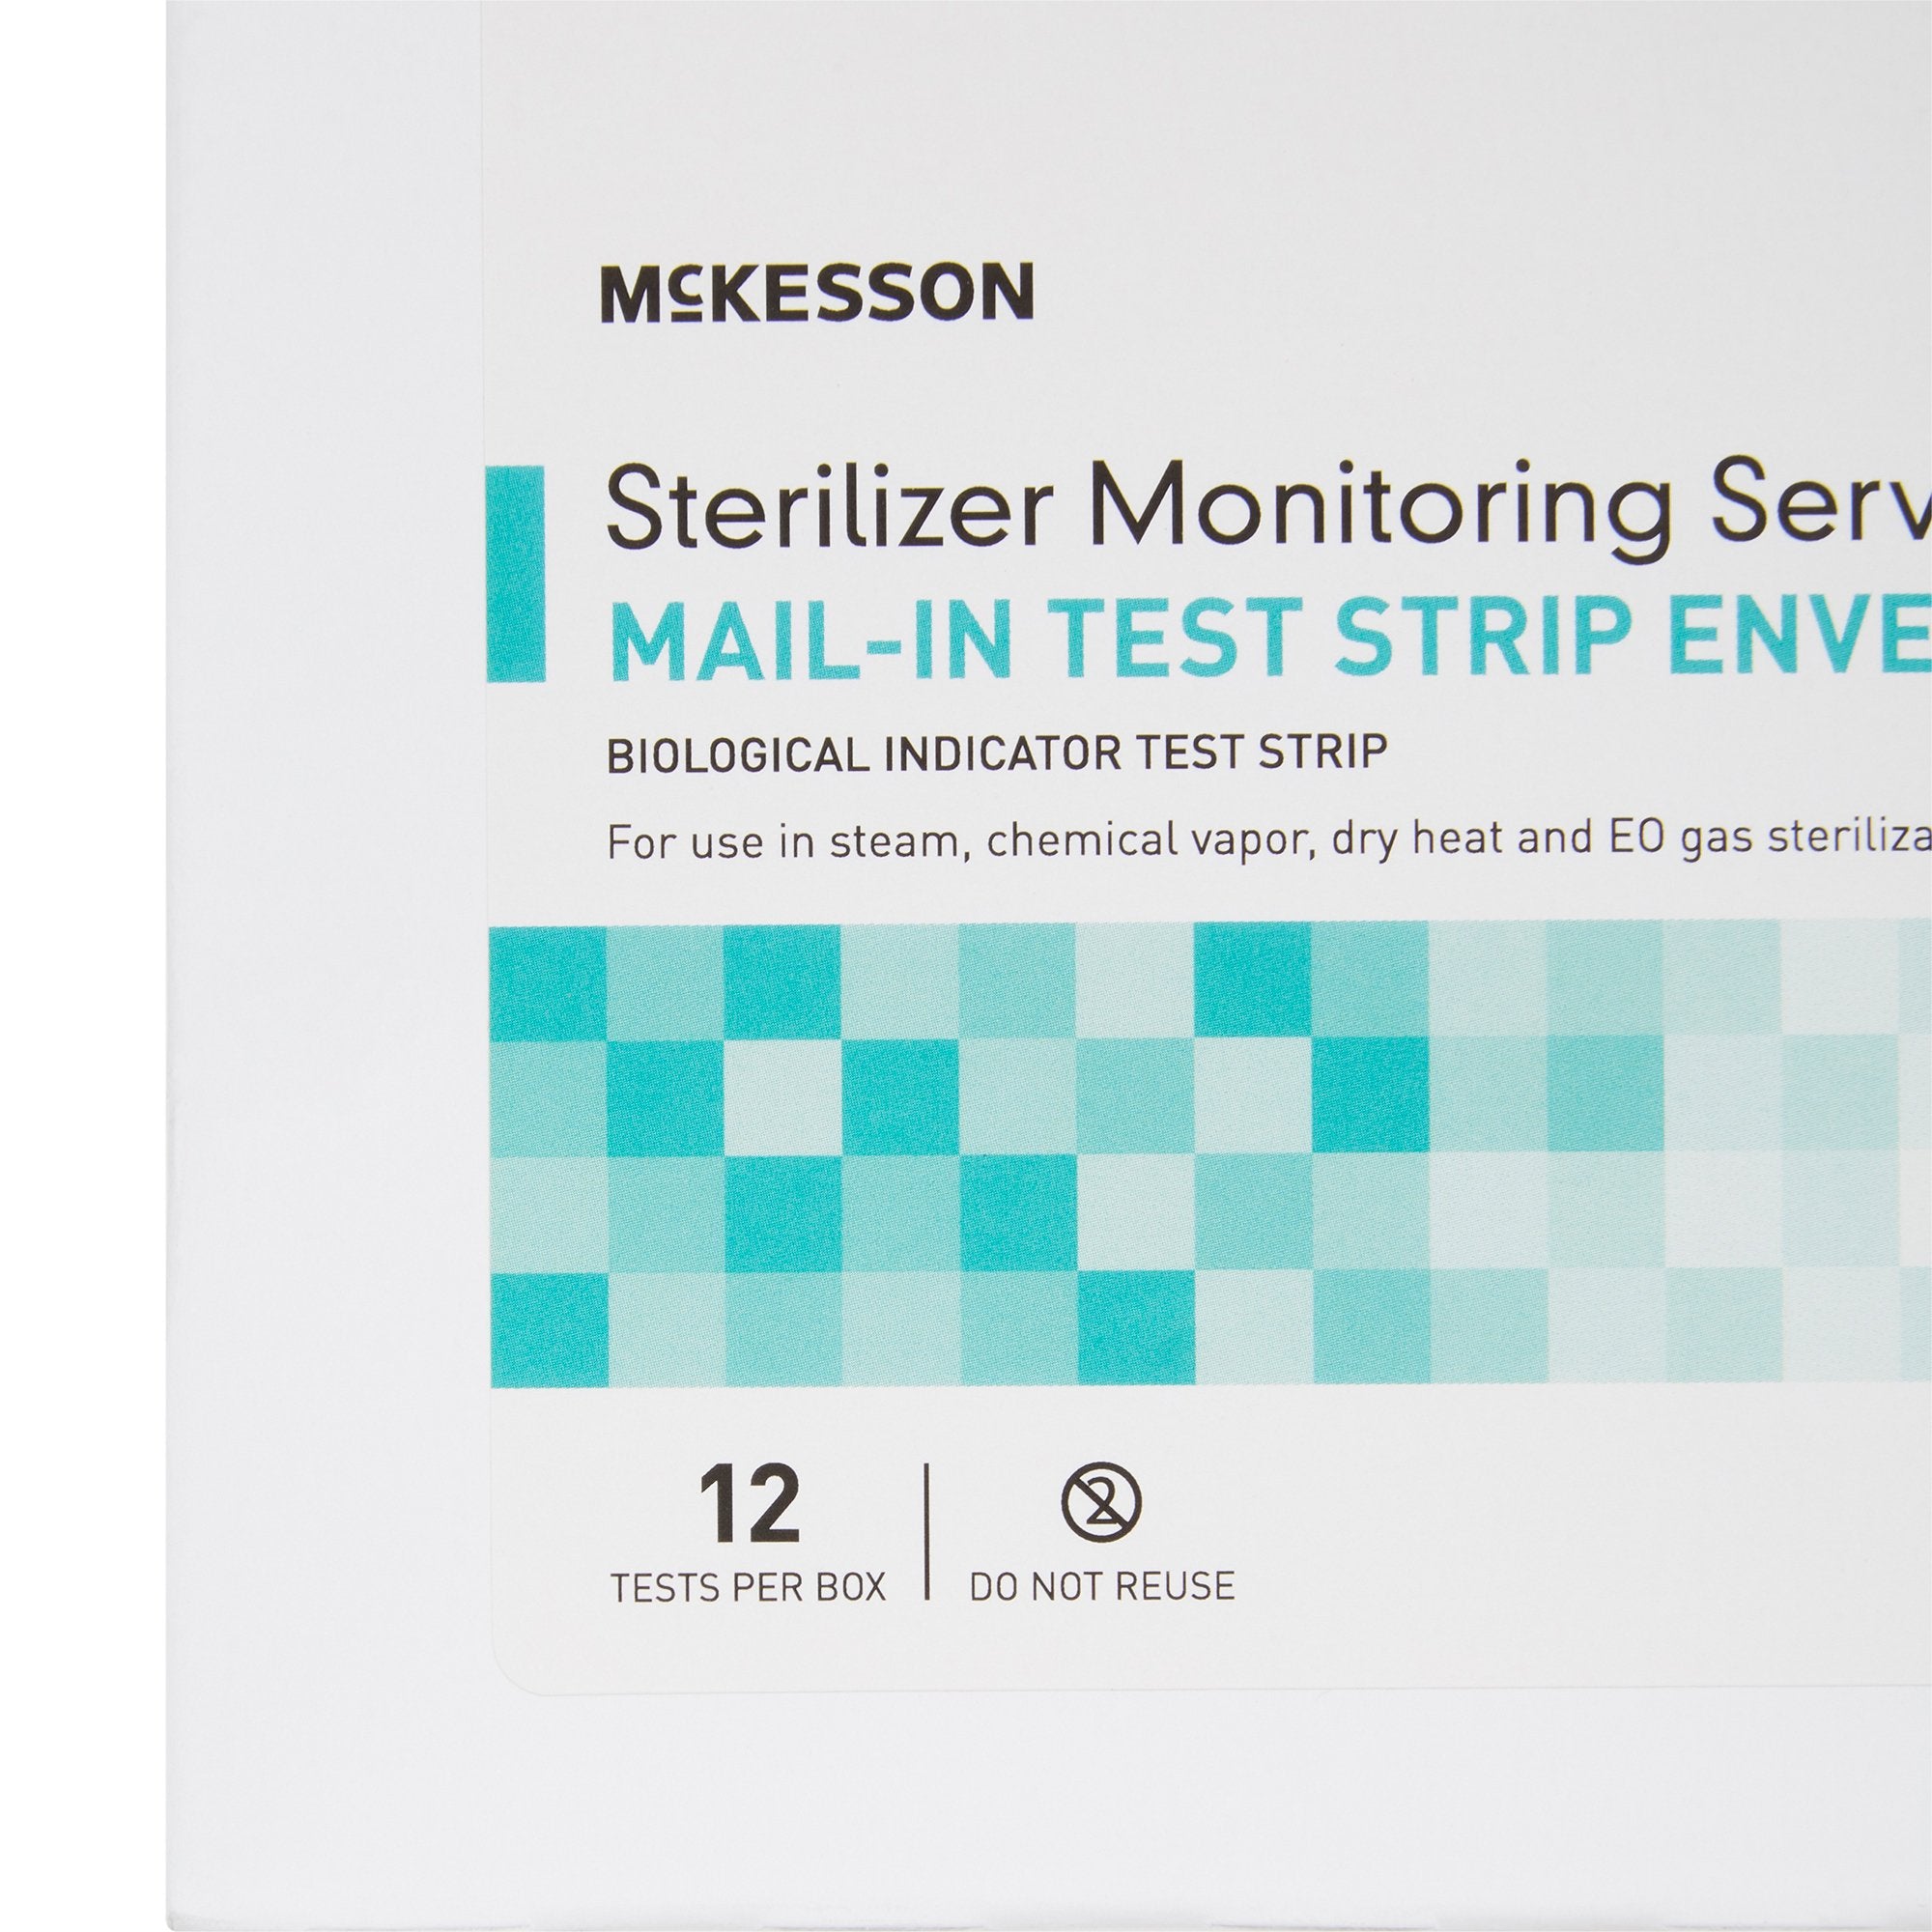 McKesson Sterilizer Monitoring Mail-In Service Steam / EO Gas / Dry Heat / Chemical Vapor